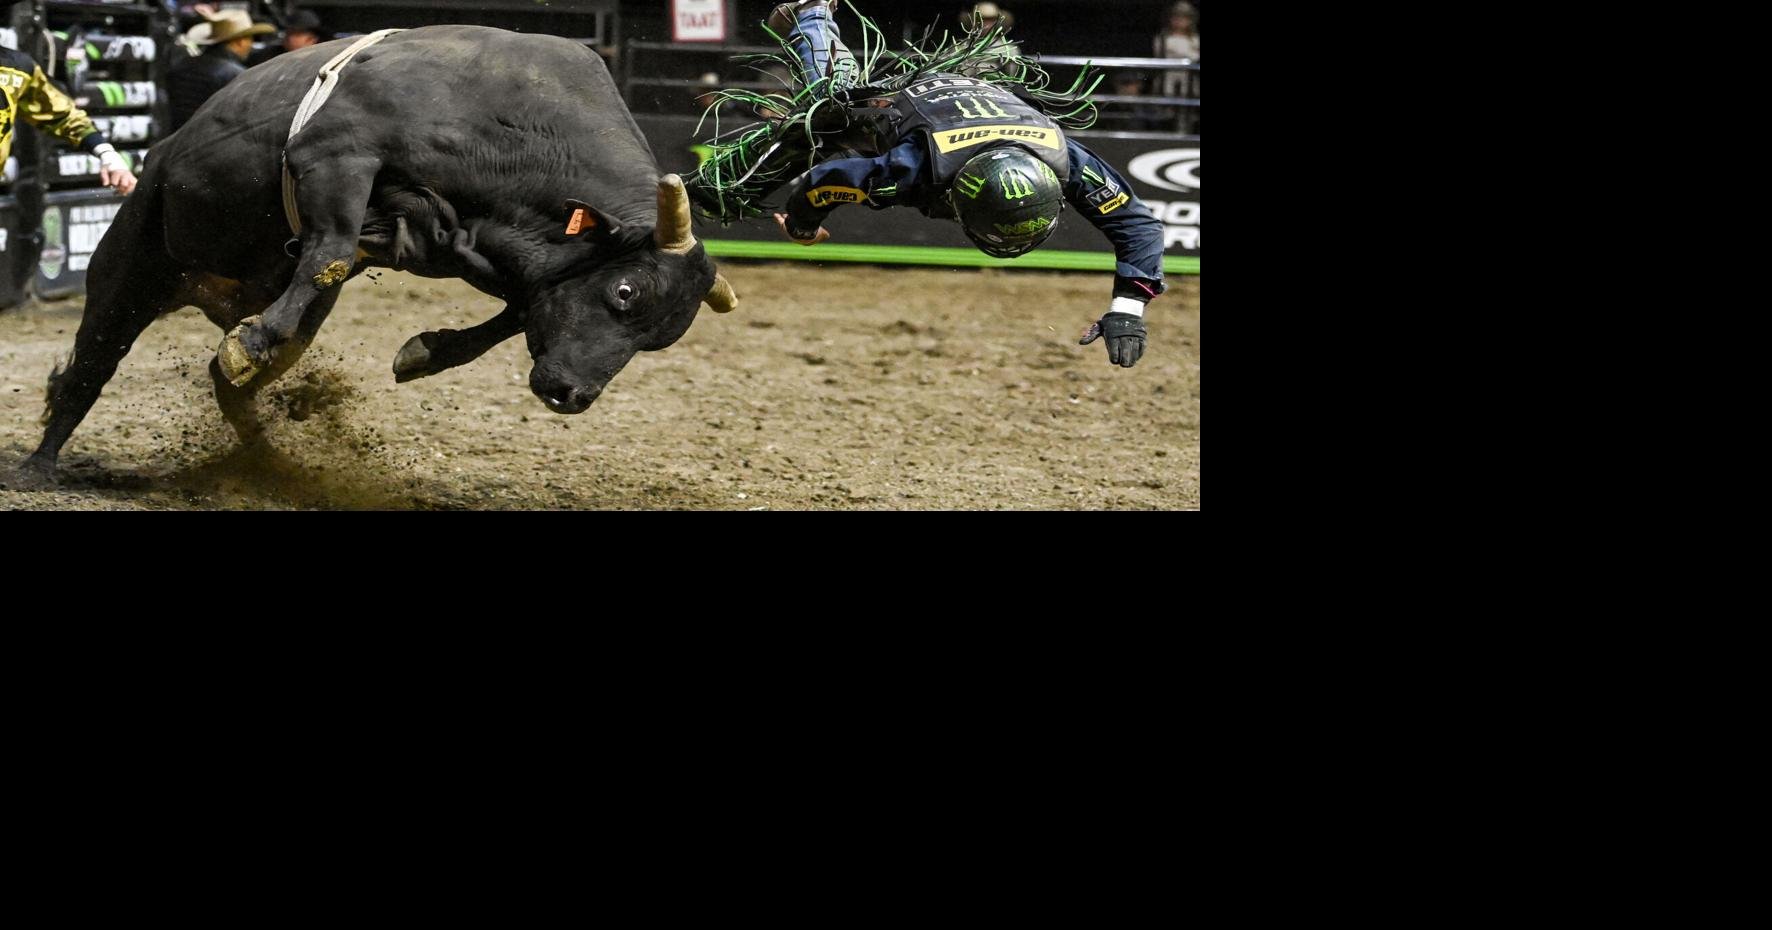 pbr bull riding wrecks